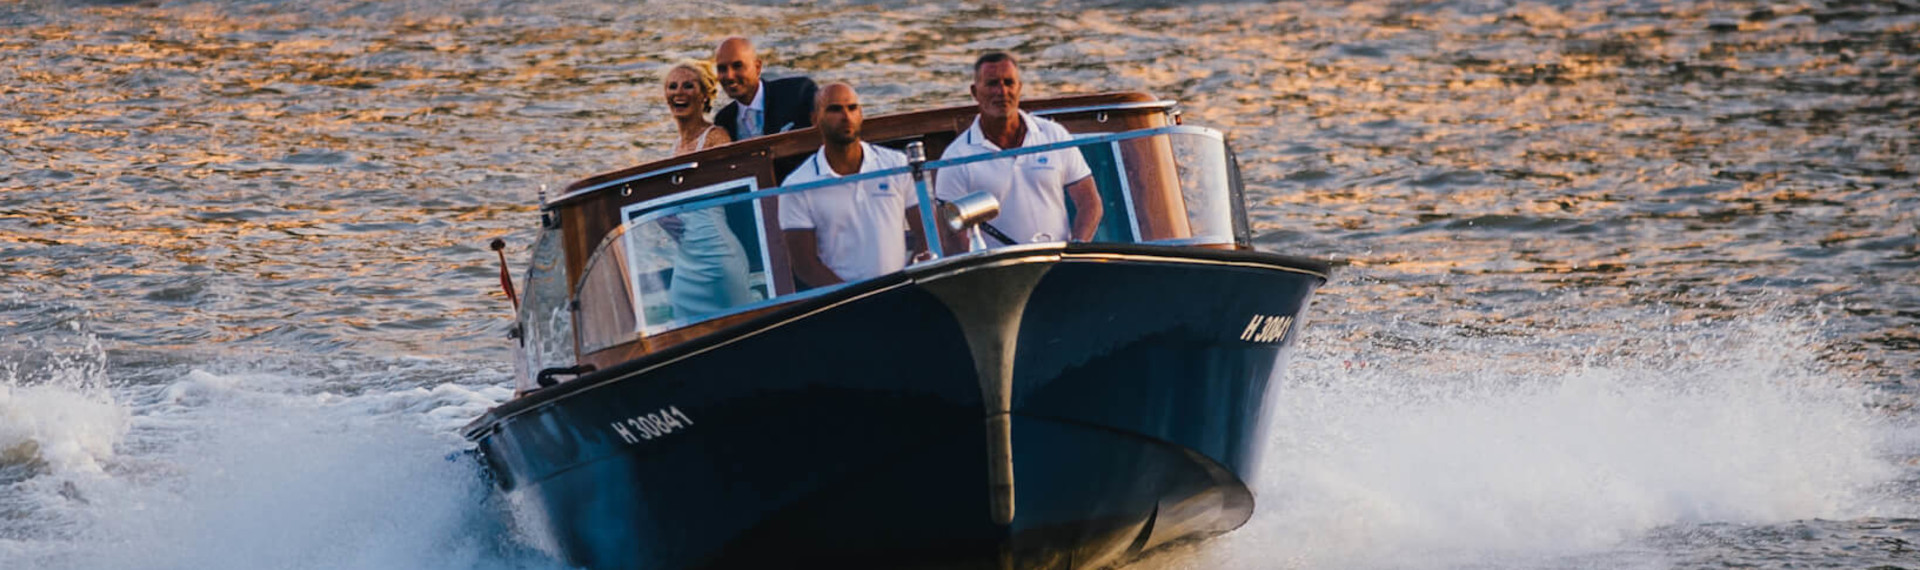 Fancy båttur på Donau i Budapest | Pissup Utdrikningslag